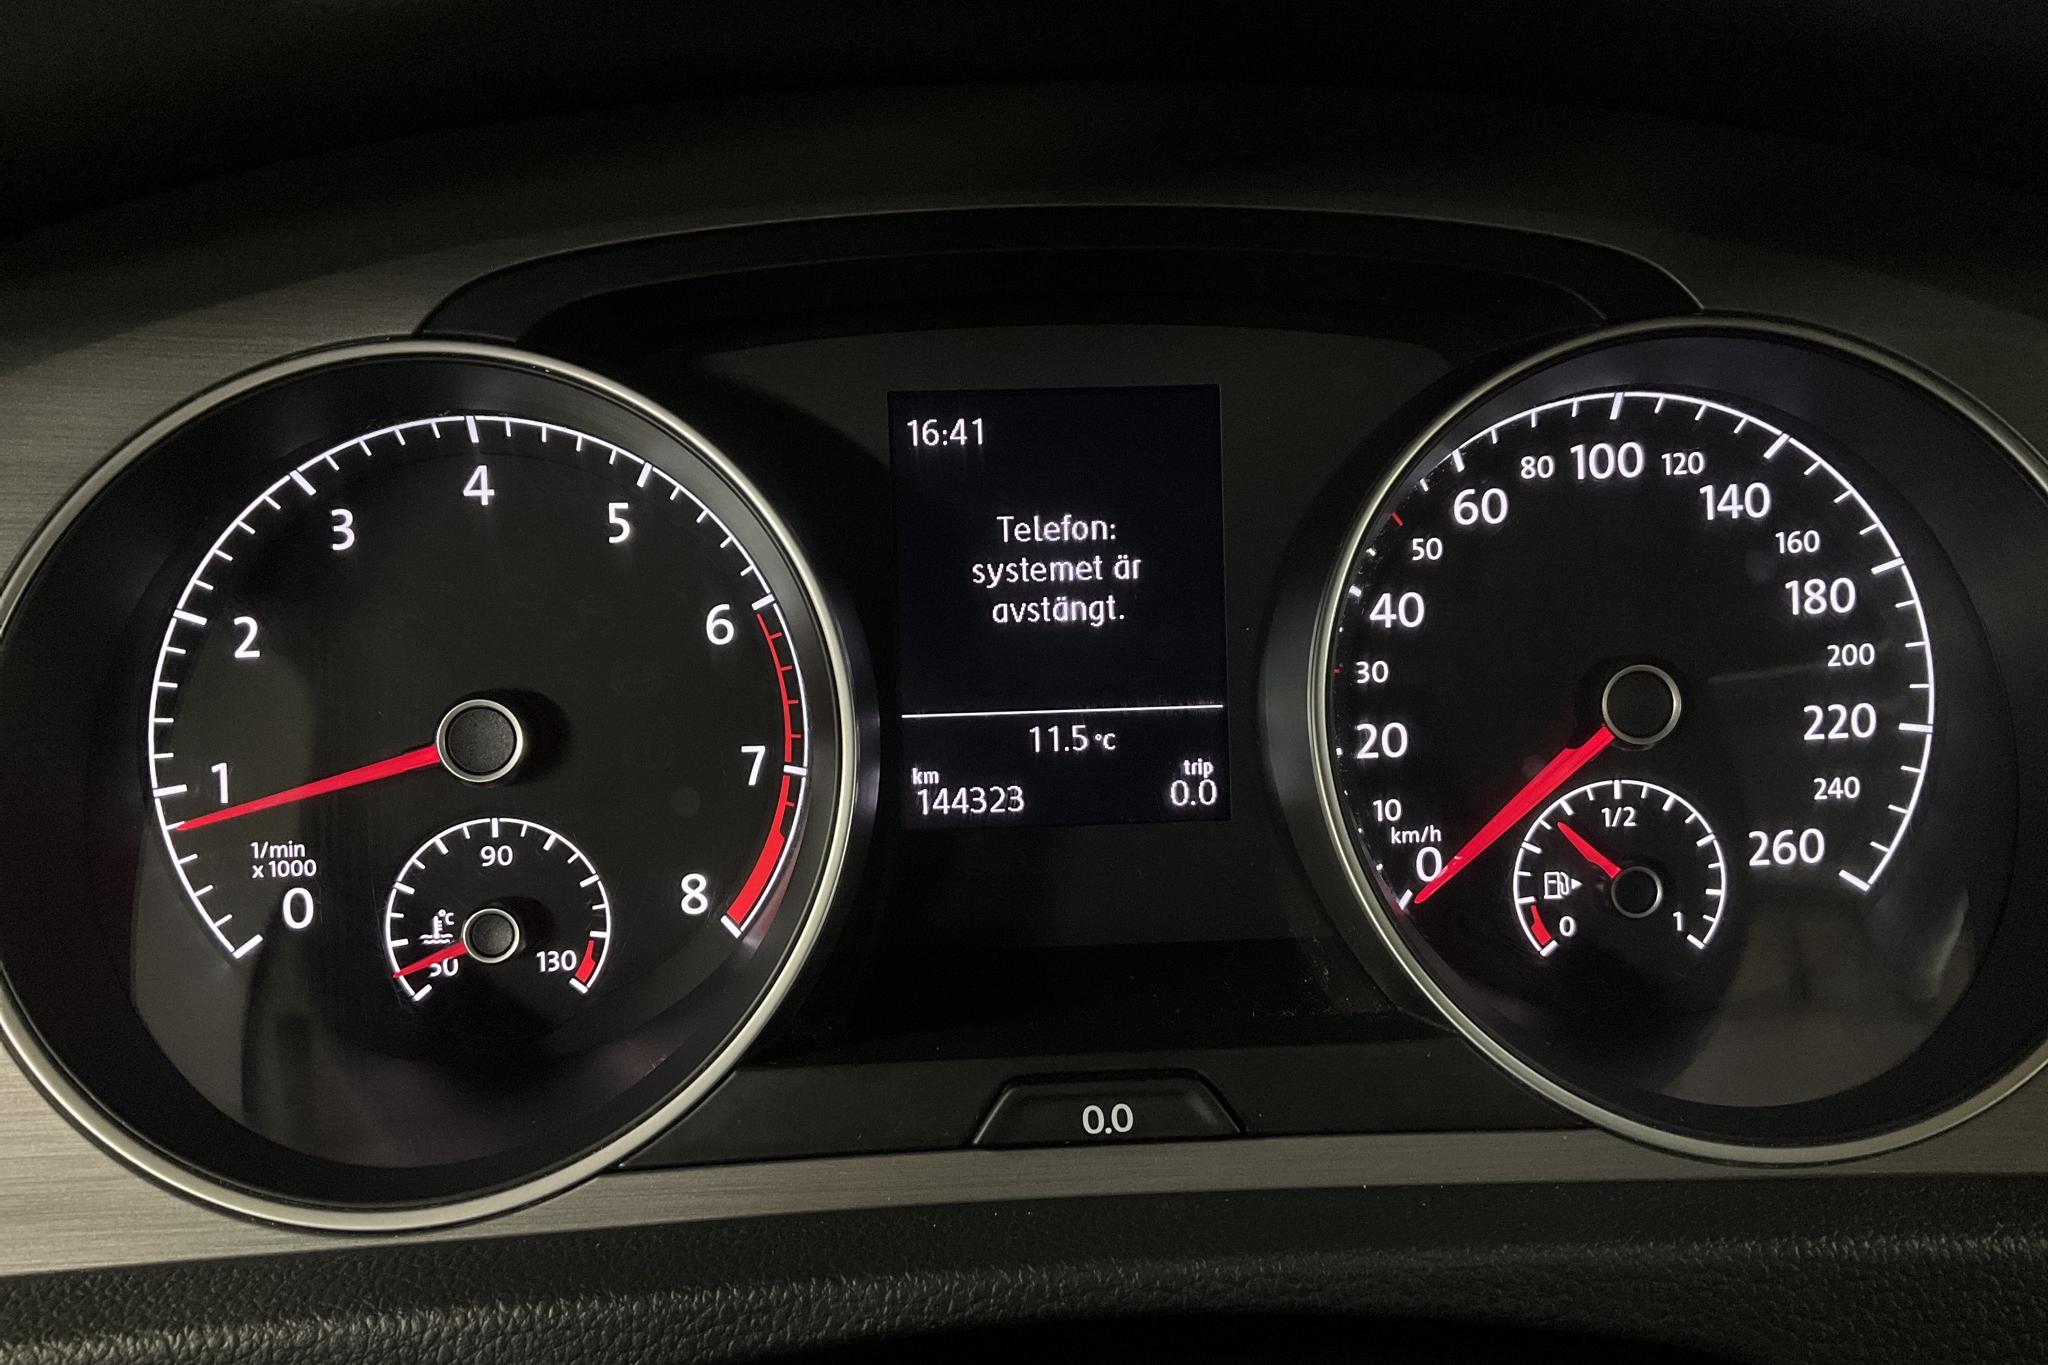 VW Golf VII 1.2 TSI 5dr (105hk) - 144 330 km - Manual - black - 2015